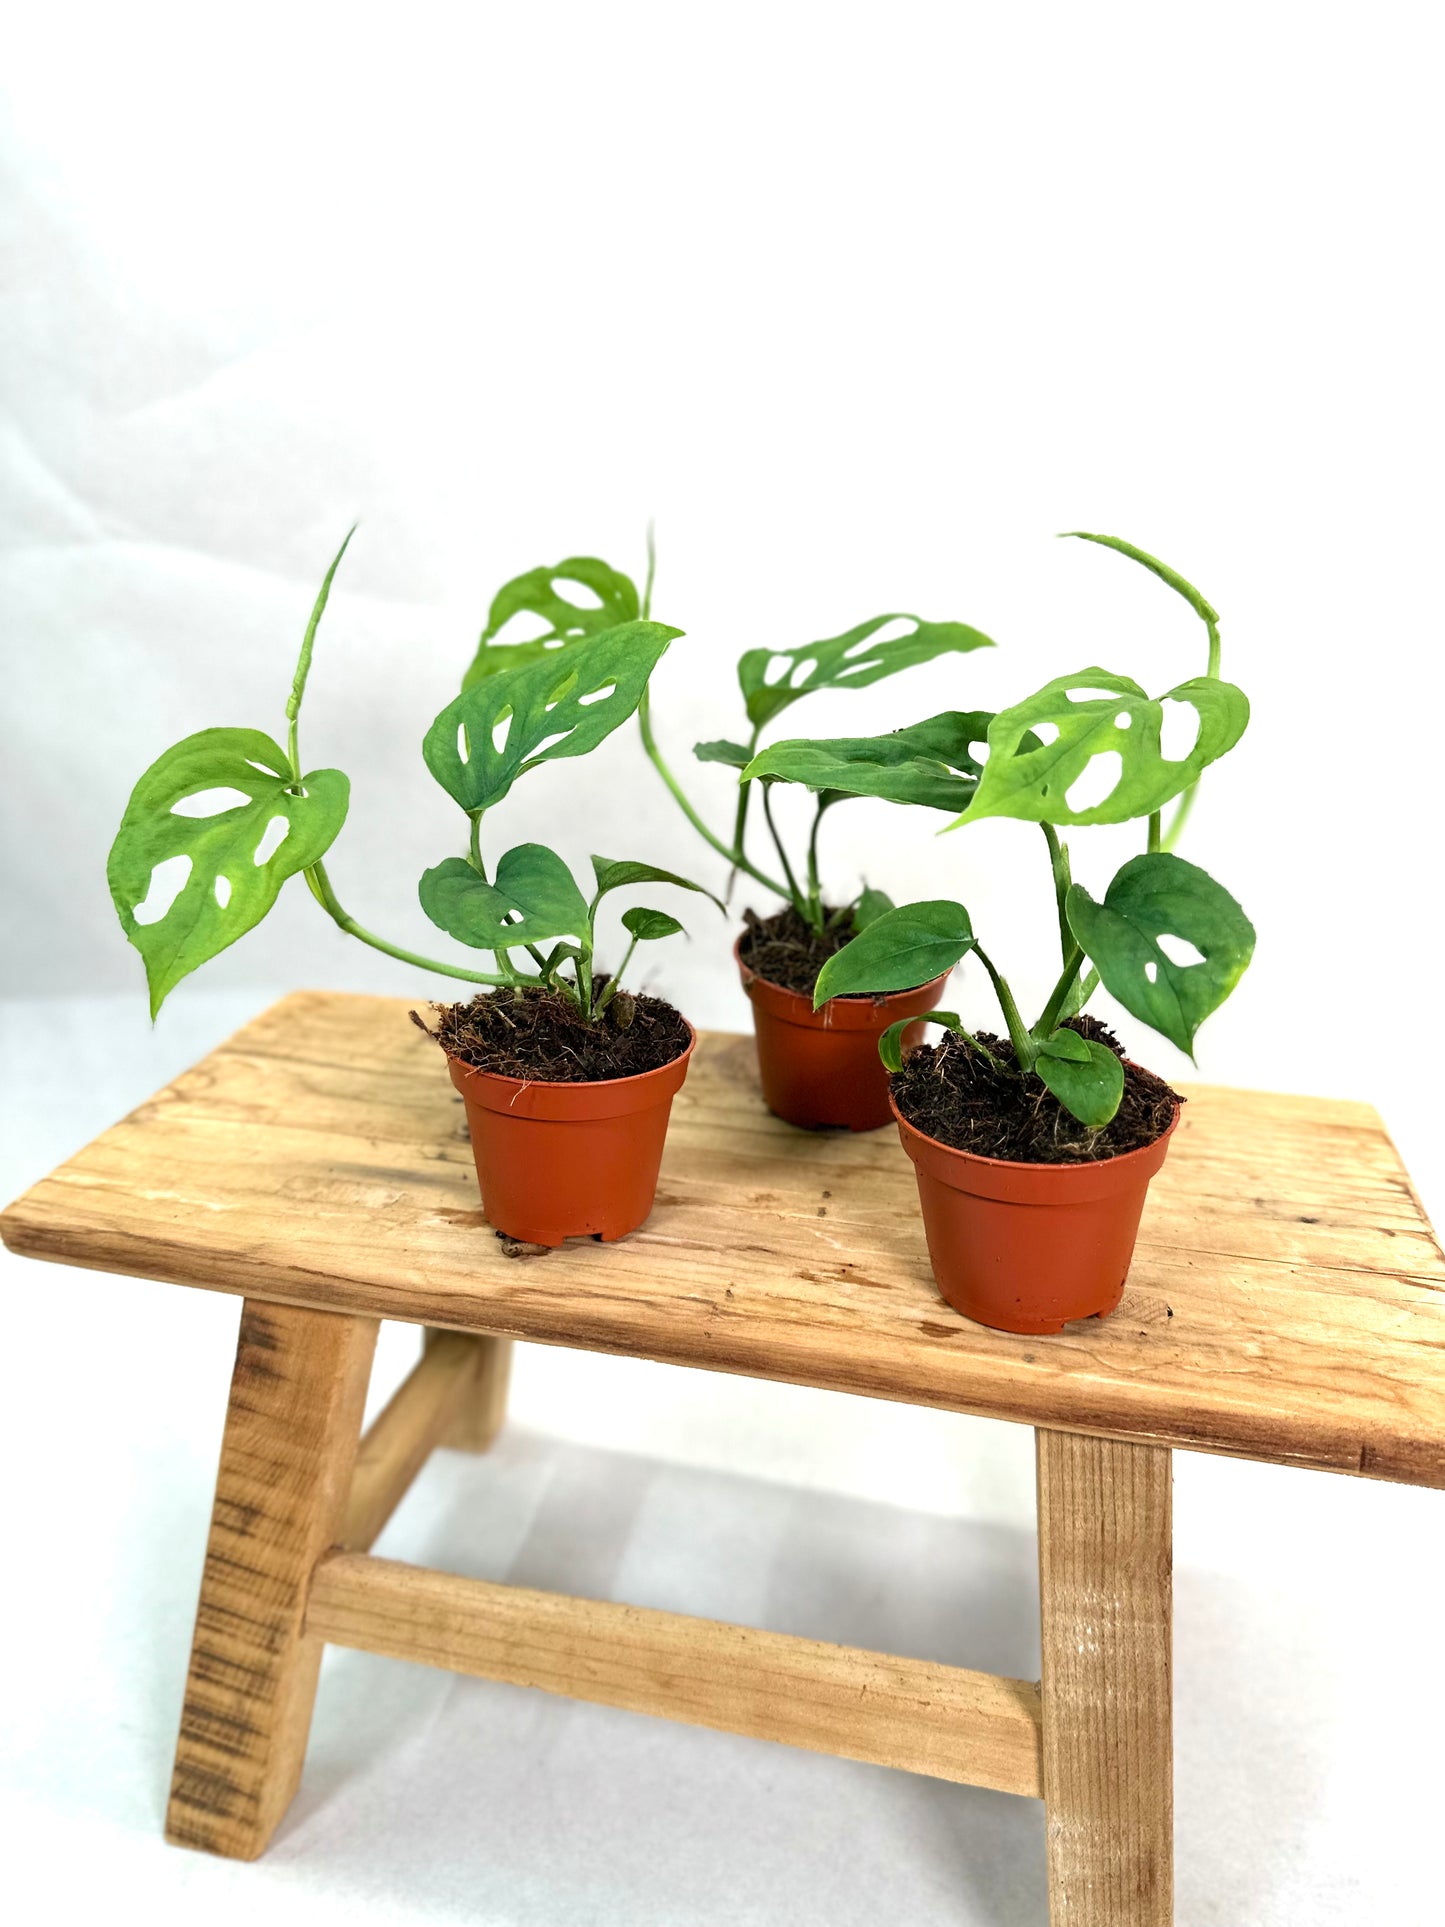 Monstera Esqueleto - Baby plant